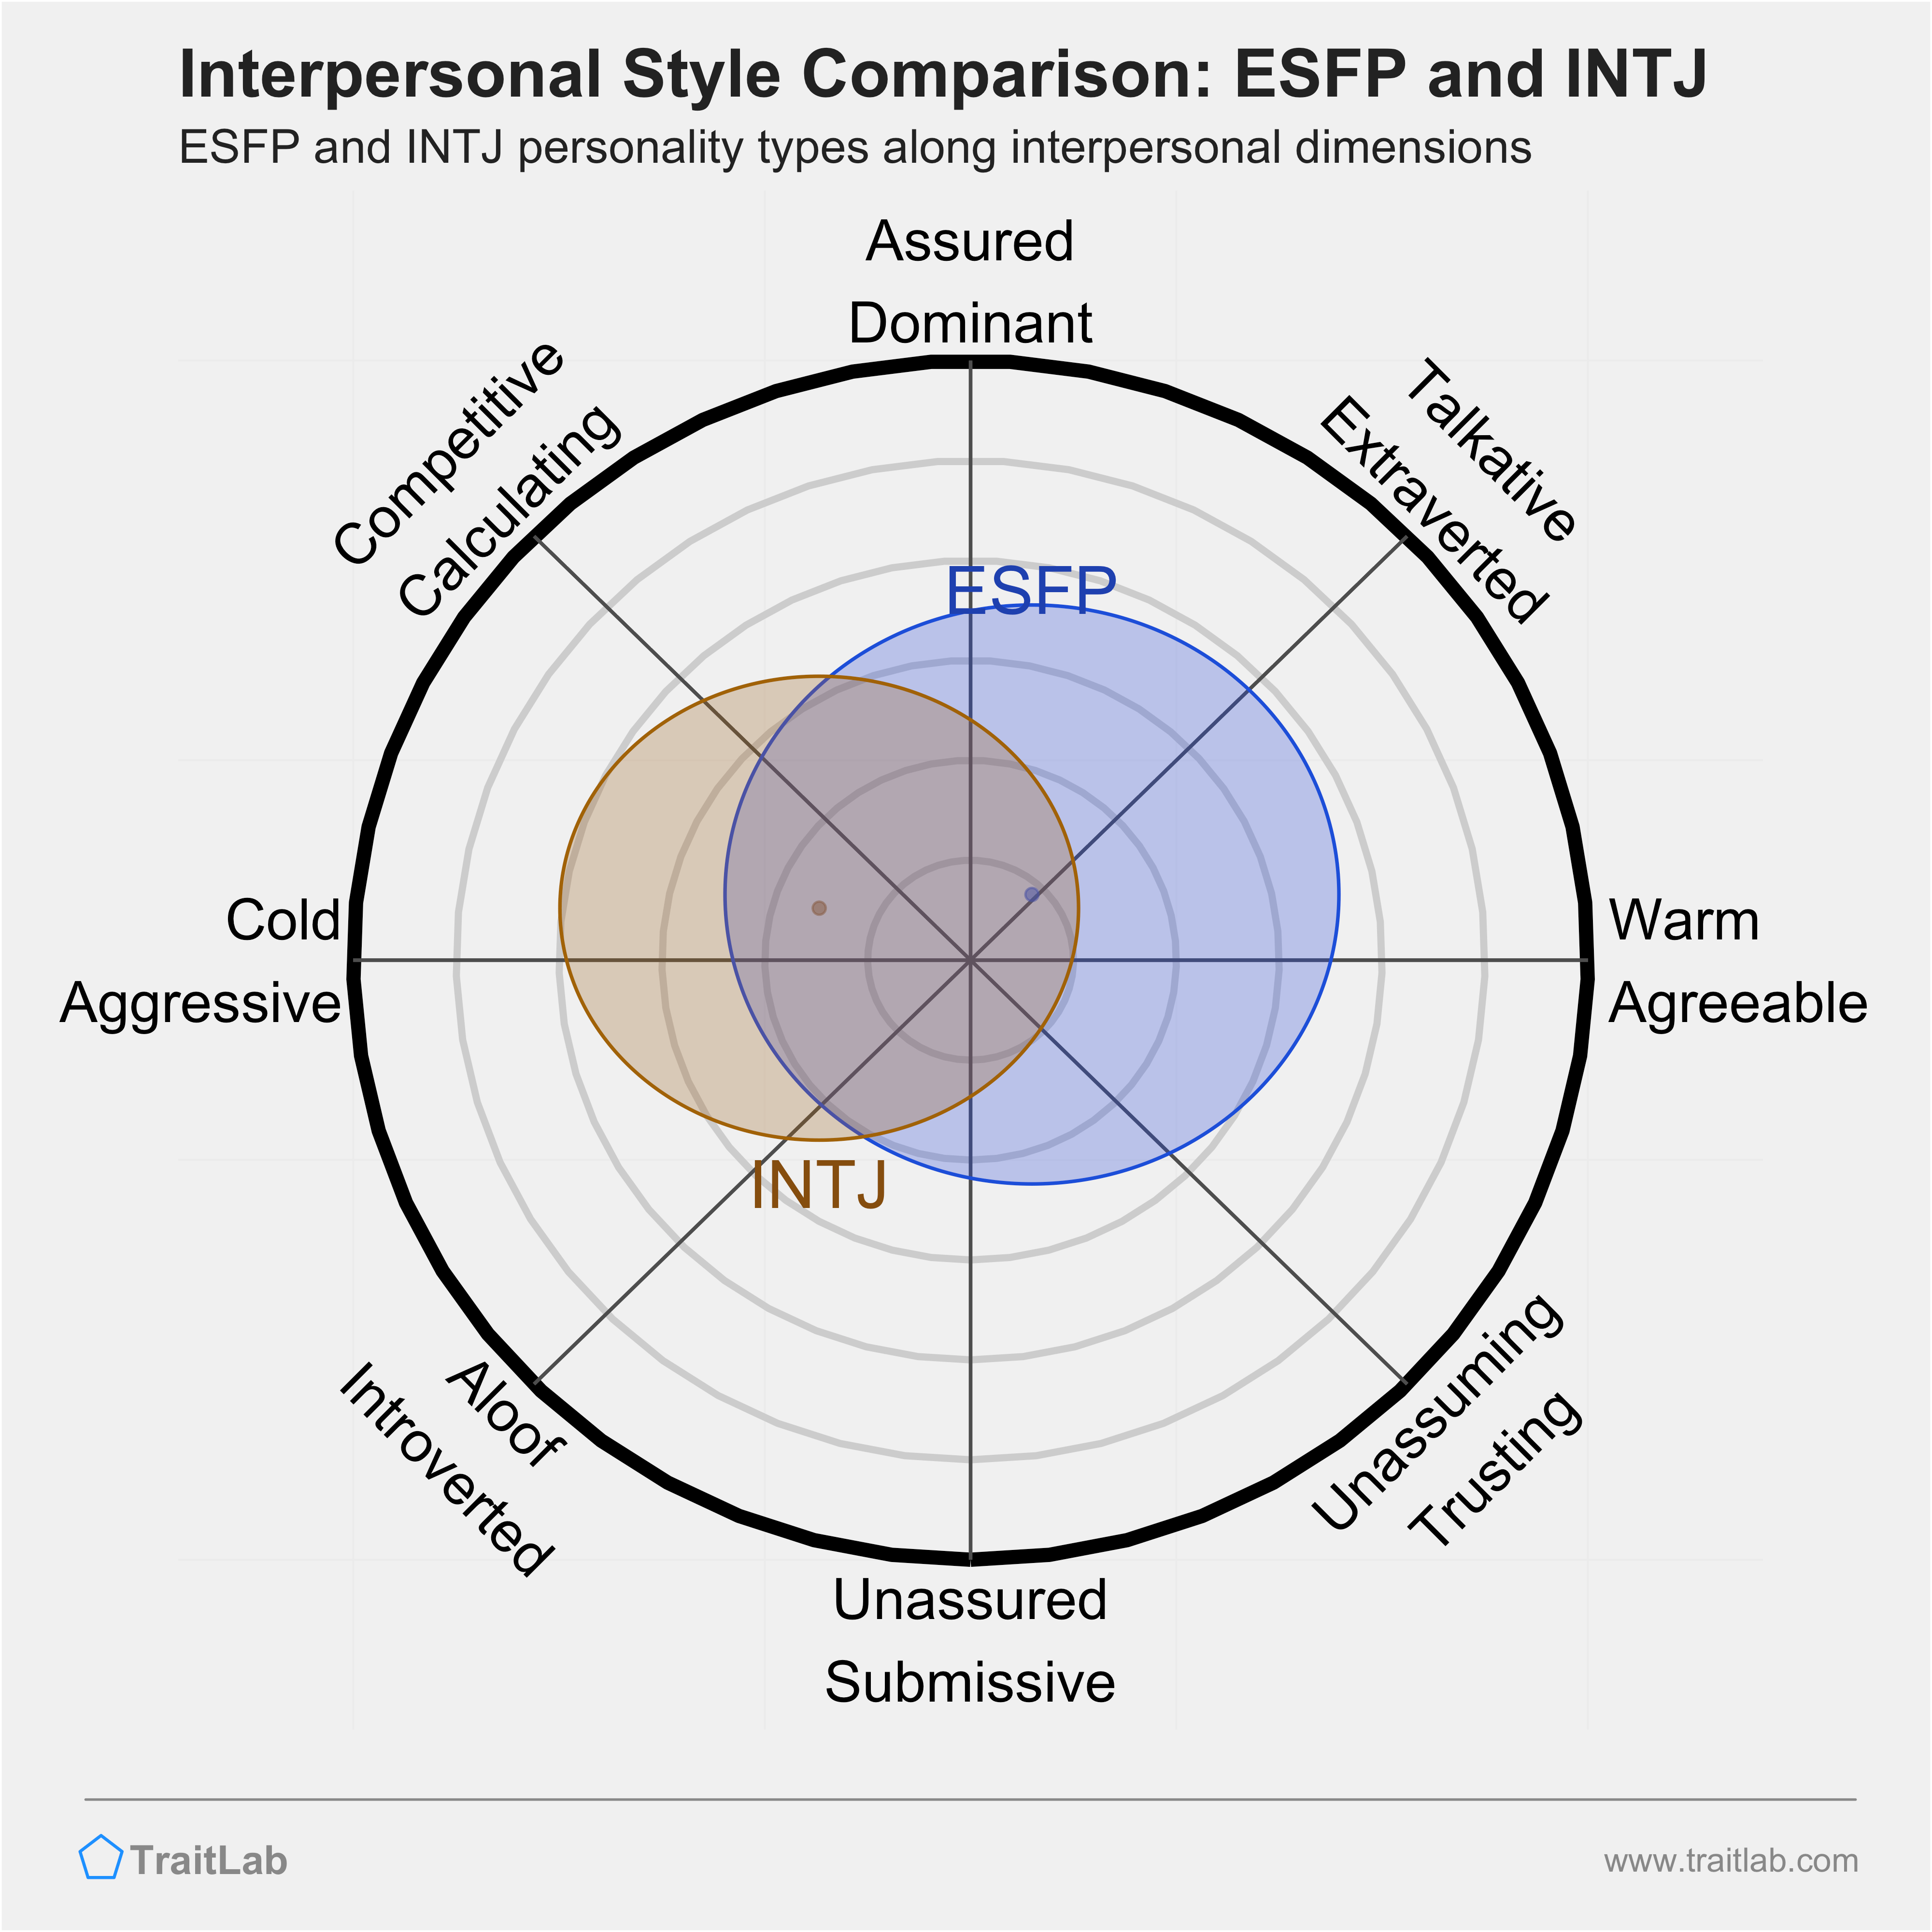 ESFP and INTJ comparison across interpersonal dimensions